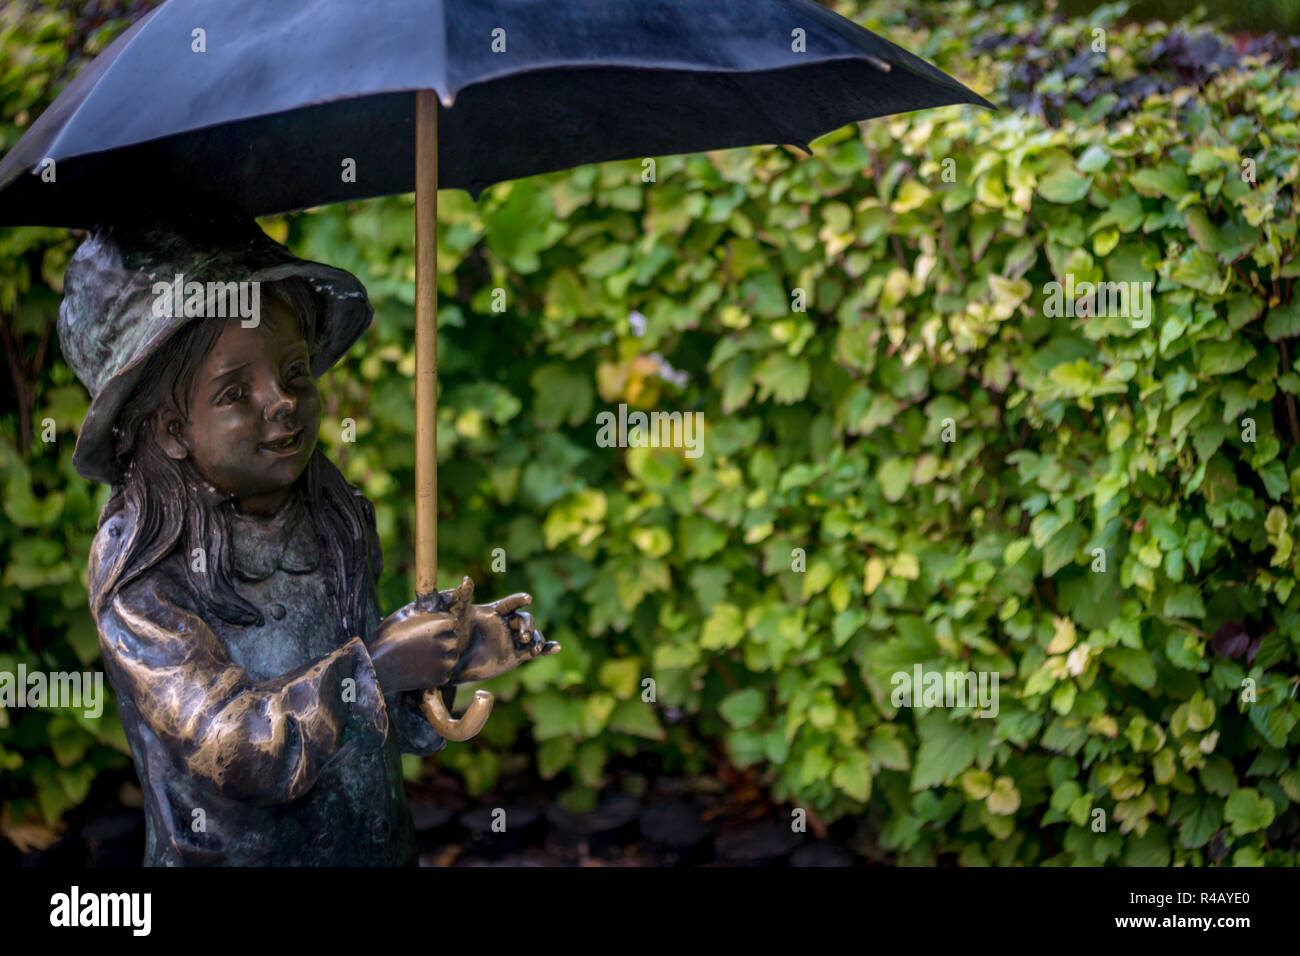 Statue of a little girl under an umbrella. Ukraine October 12, 2018 Stock Photo